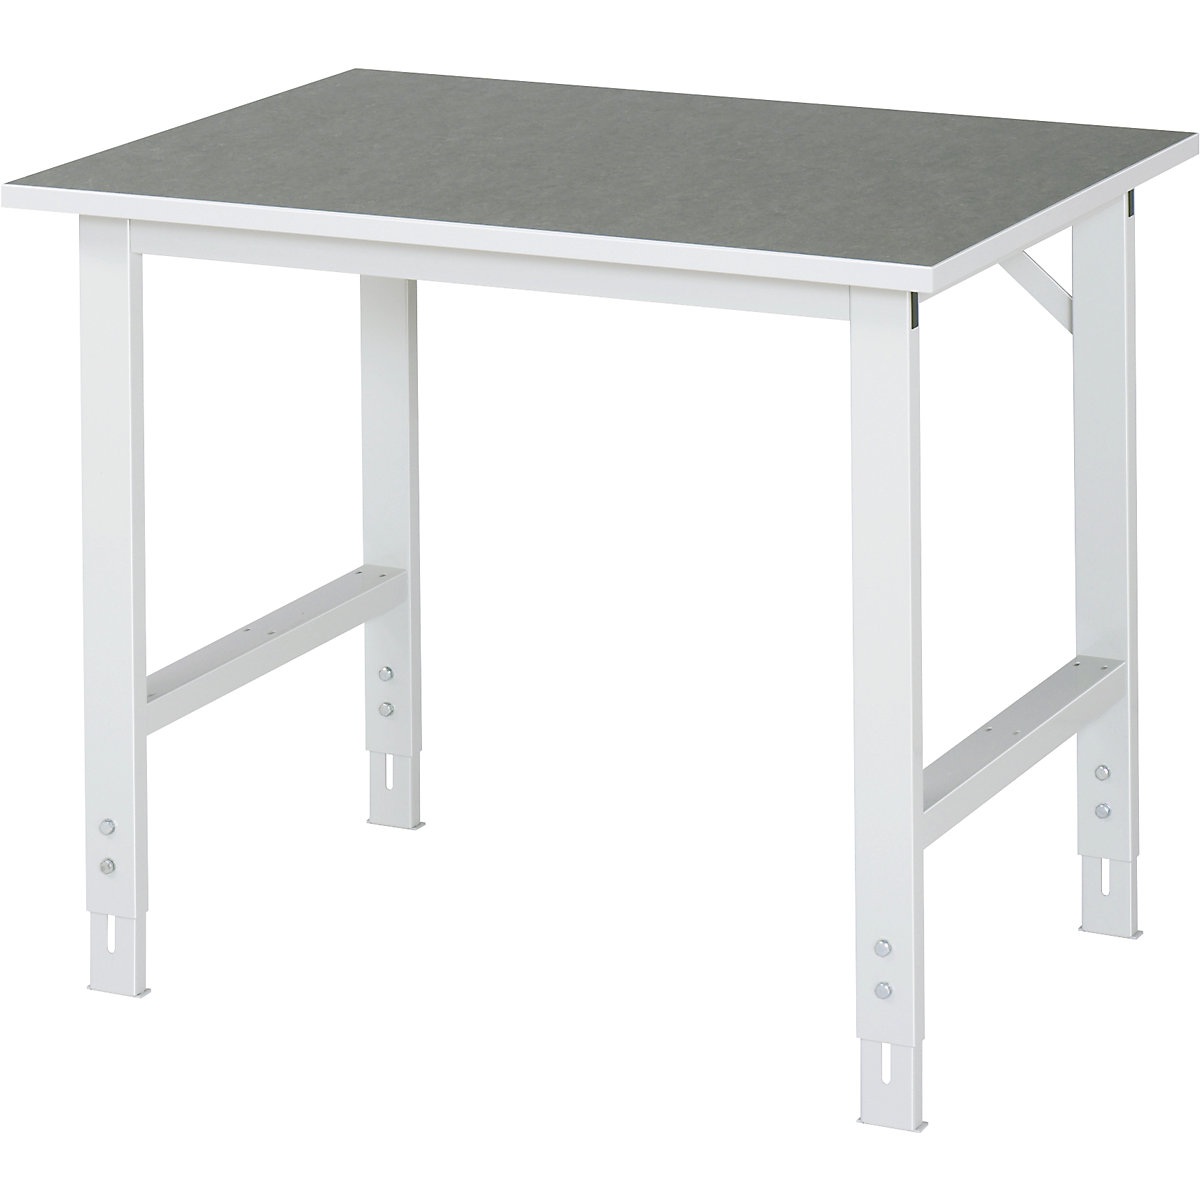 Werktafel, in hoogte verstelbaar – RAU, 760 – 1080 mm, linoleum blad, b x d = 1000 x 800 mm, lichtgrijs-10